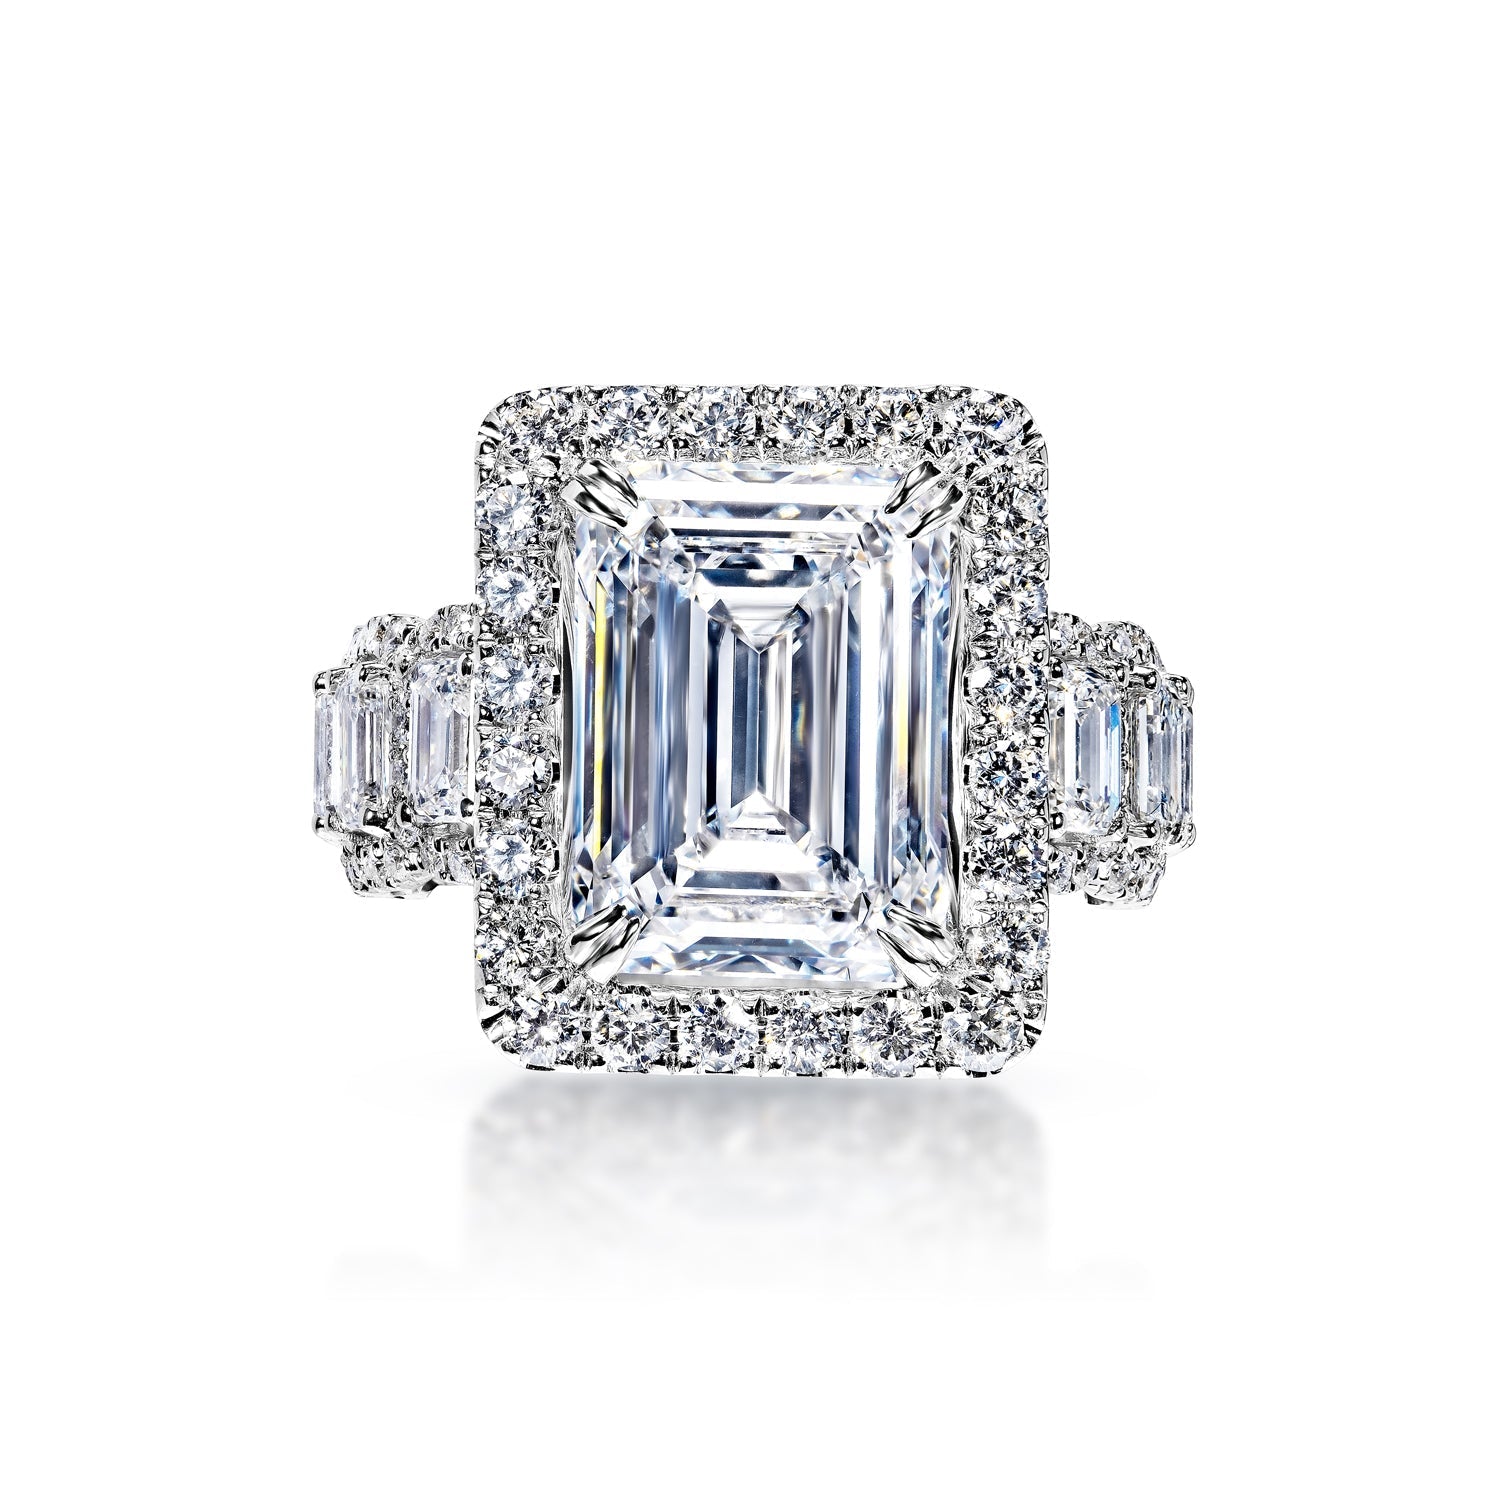 Lamya 11 Carat G VS1 Emerald Cut Lab Grown Diamond Engagement Ring in 18k White Gold Front View